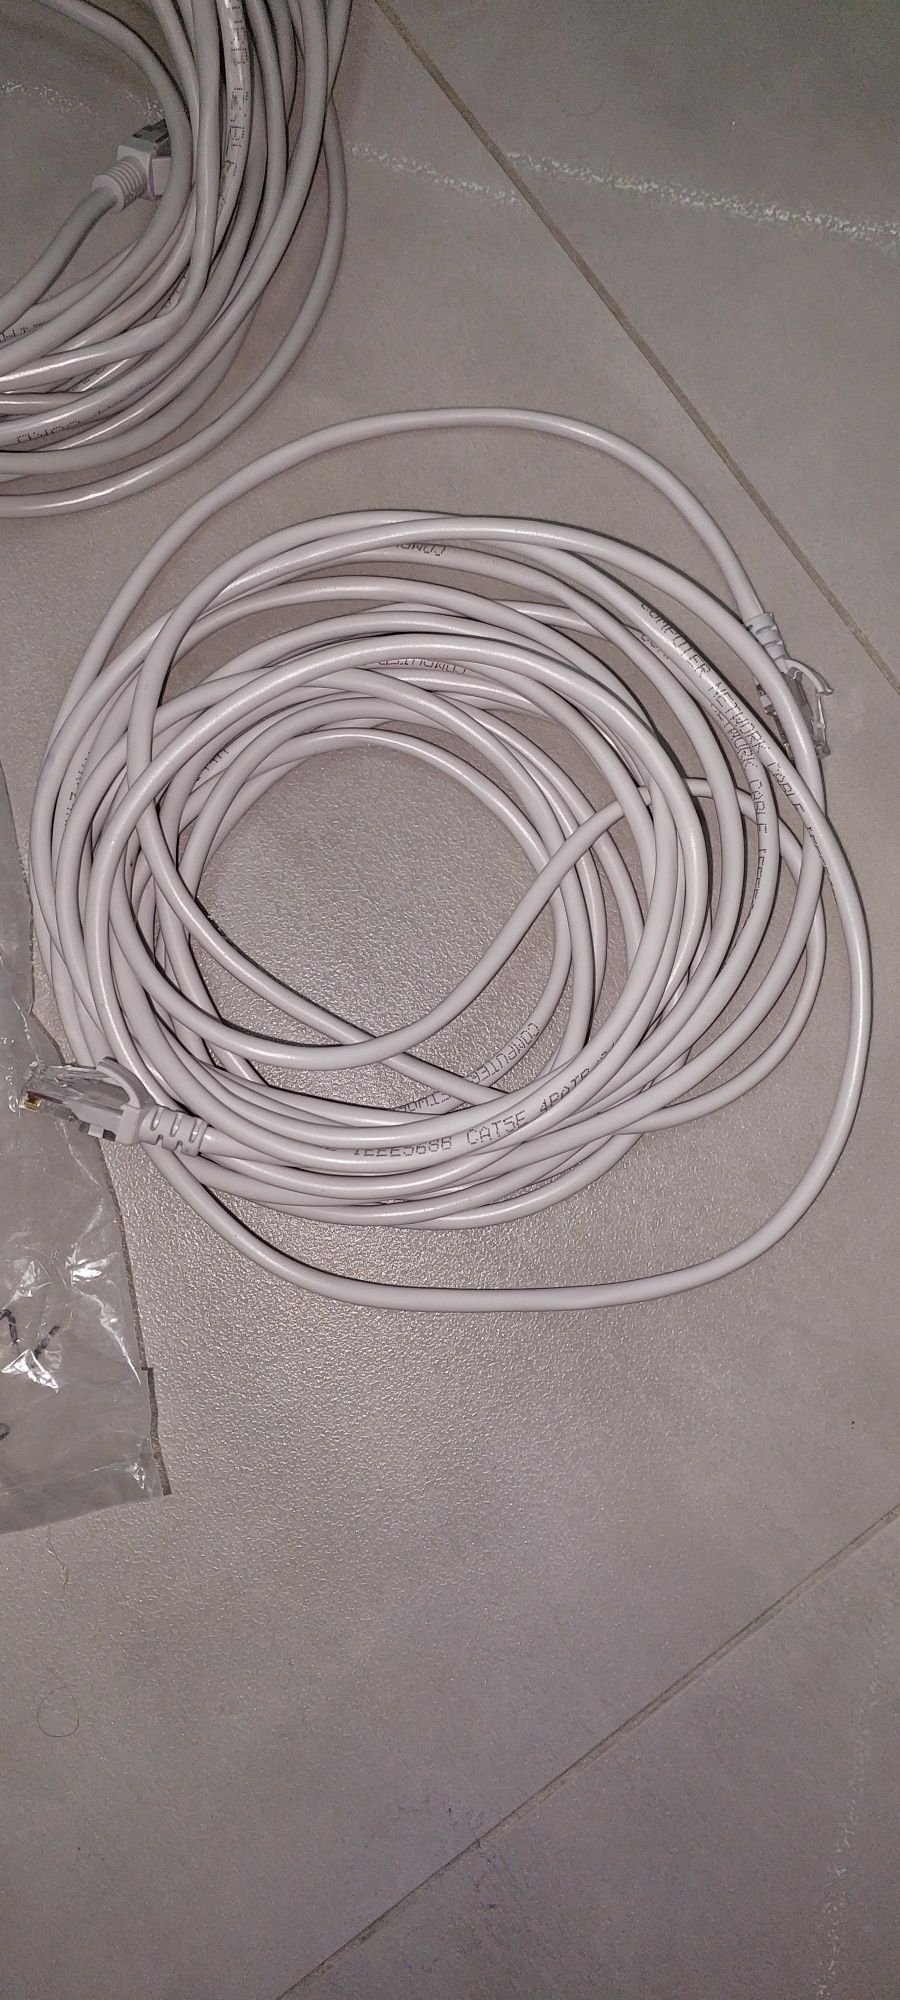 Інтернет кабель 7,5м